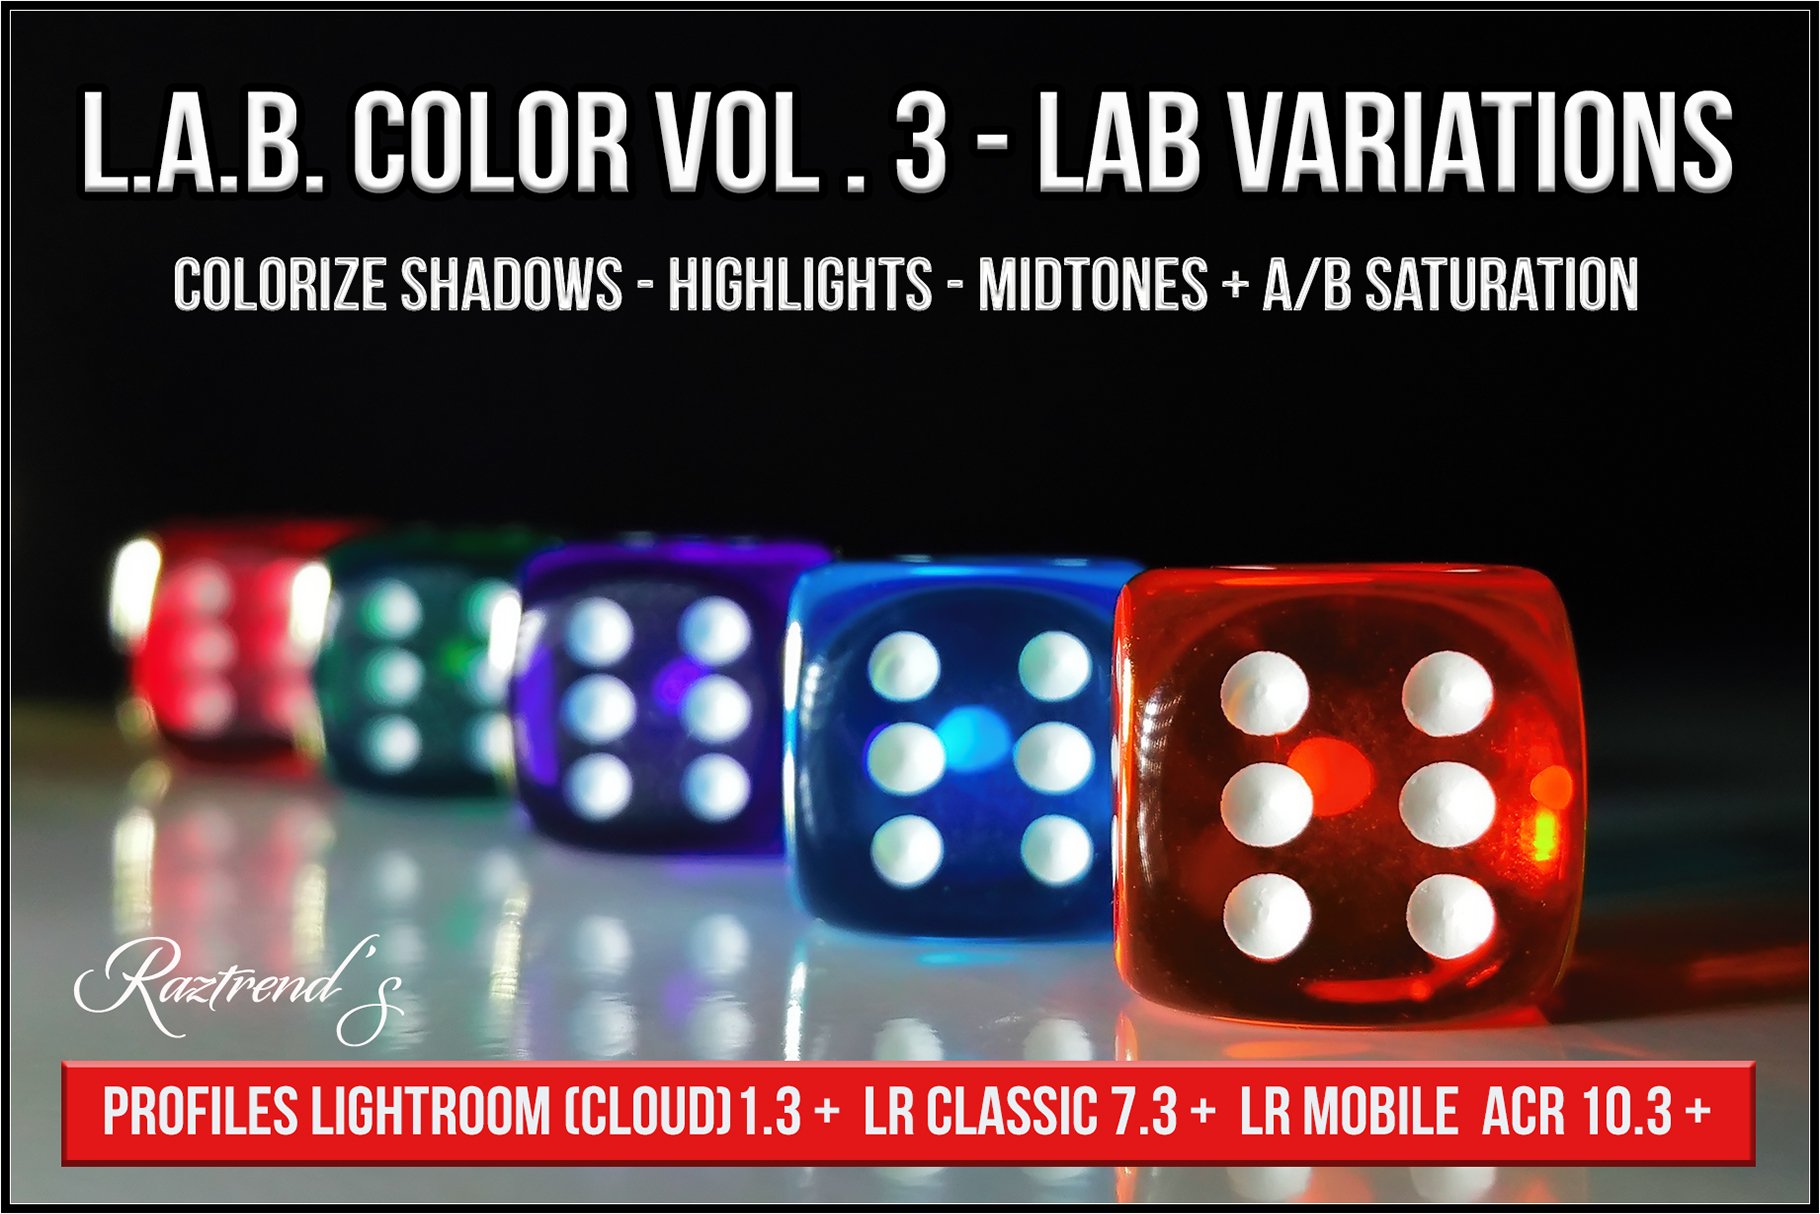 LAB Color Vol. 3 - Lab Variationscover image.